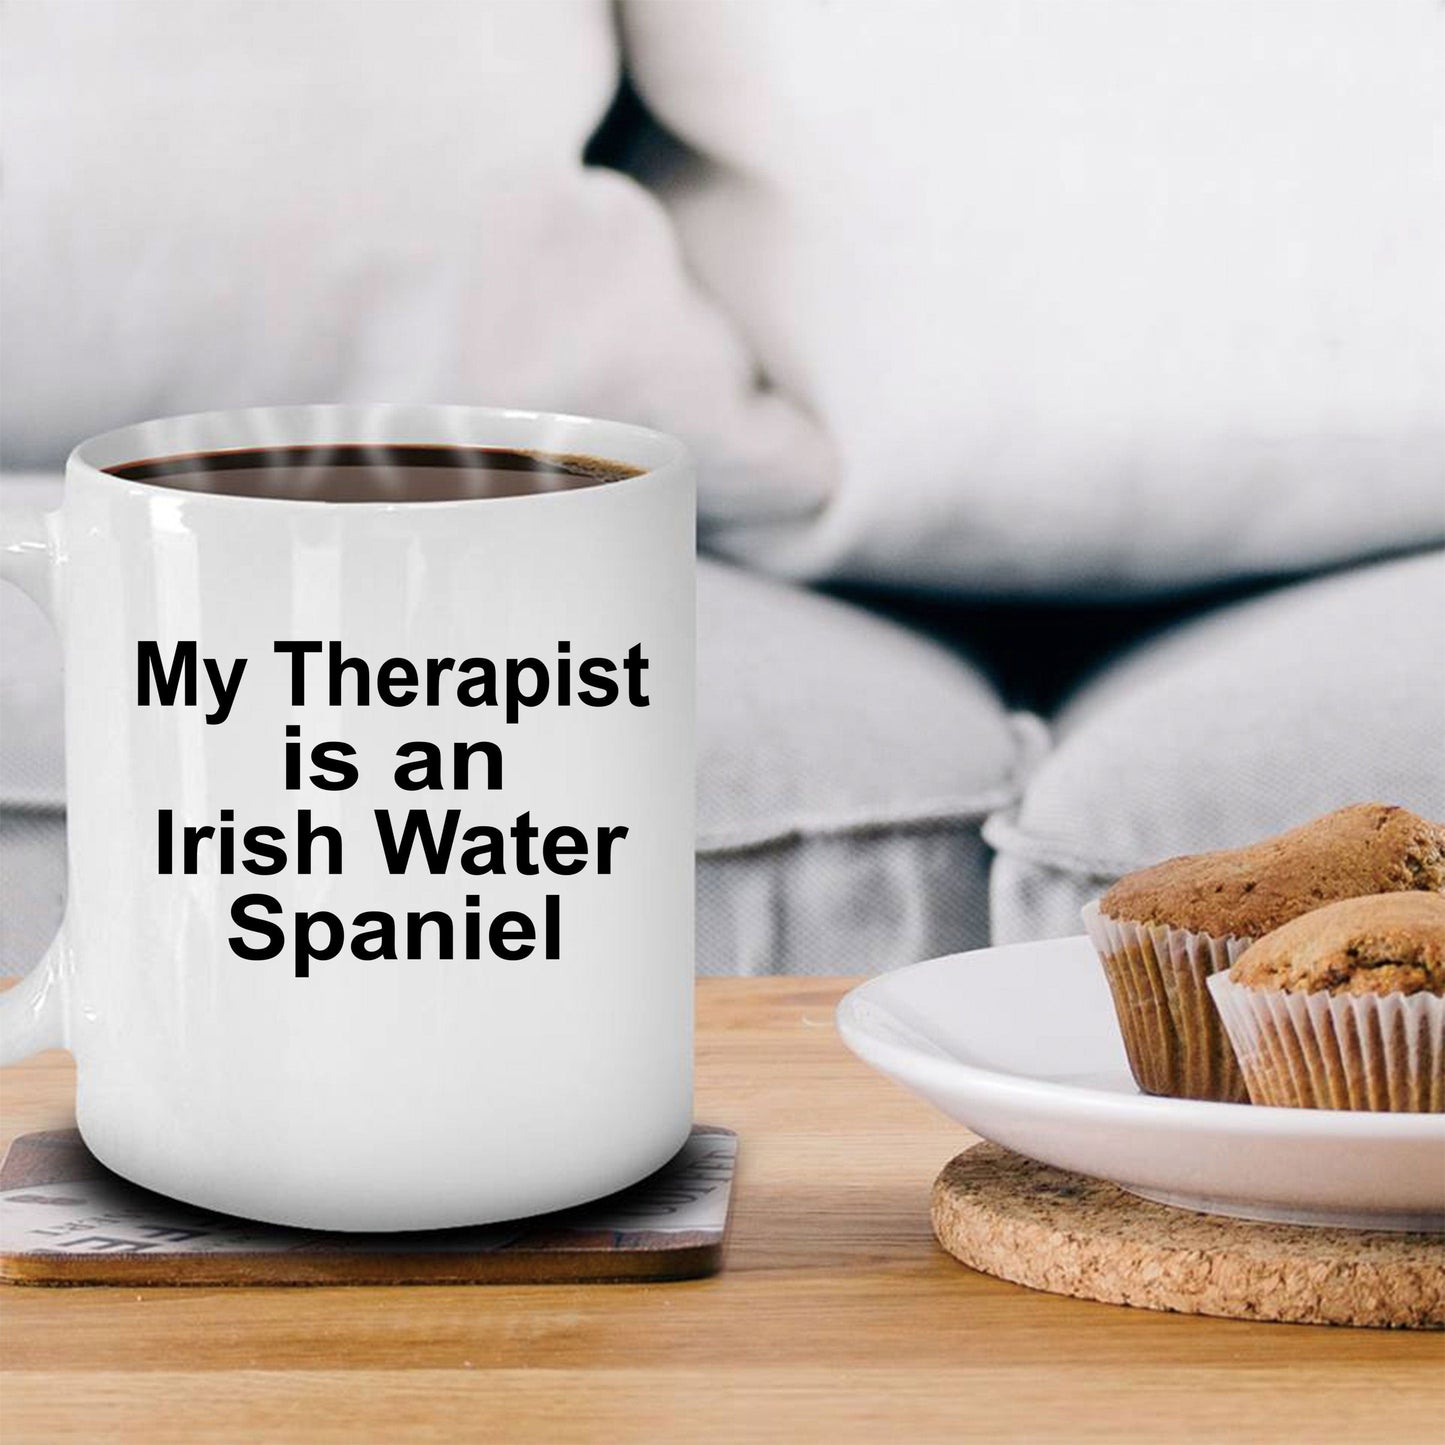 Irish Water Spaniel Dog Owner Lover Funny Gift Therapist White Ceramic Coffee Mug